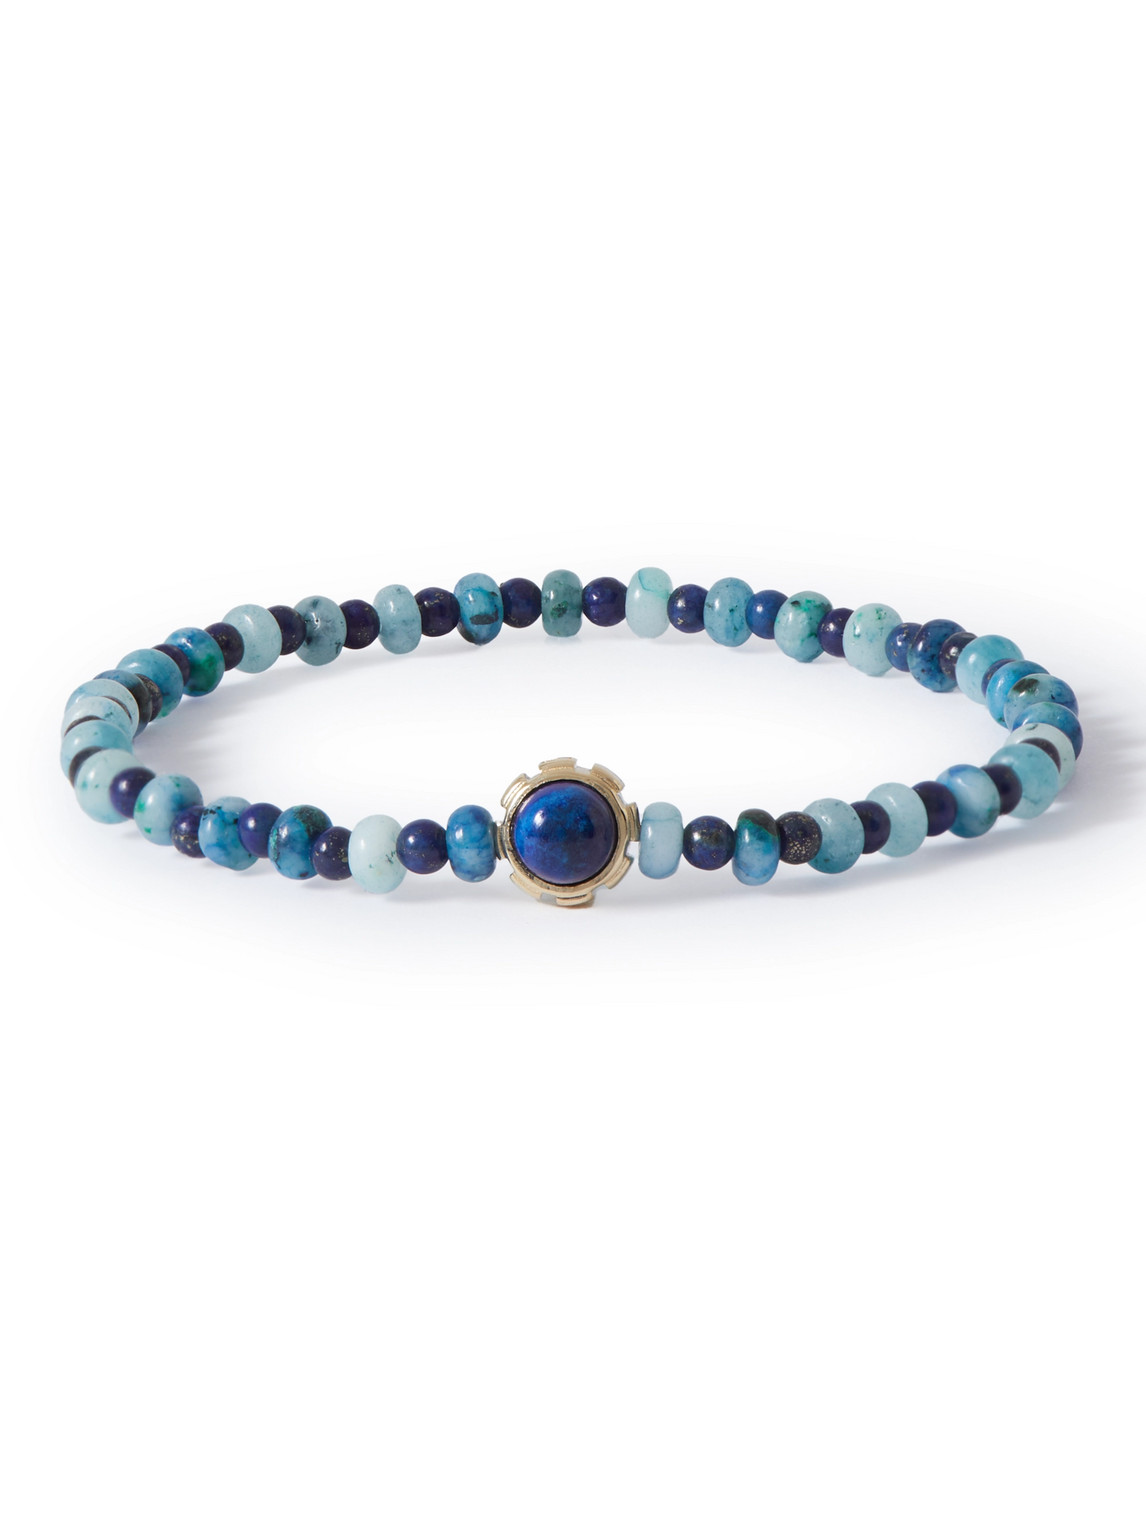 Luis Morais Gold, Turquoise And Lapis Lazuli Beaded Bracelet In Blue